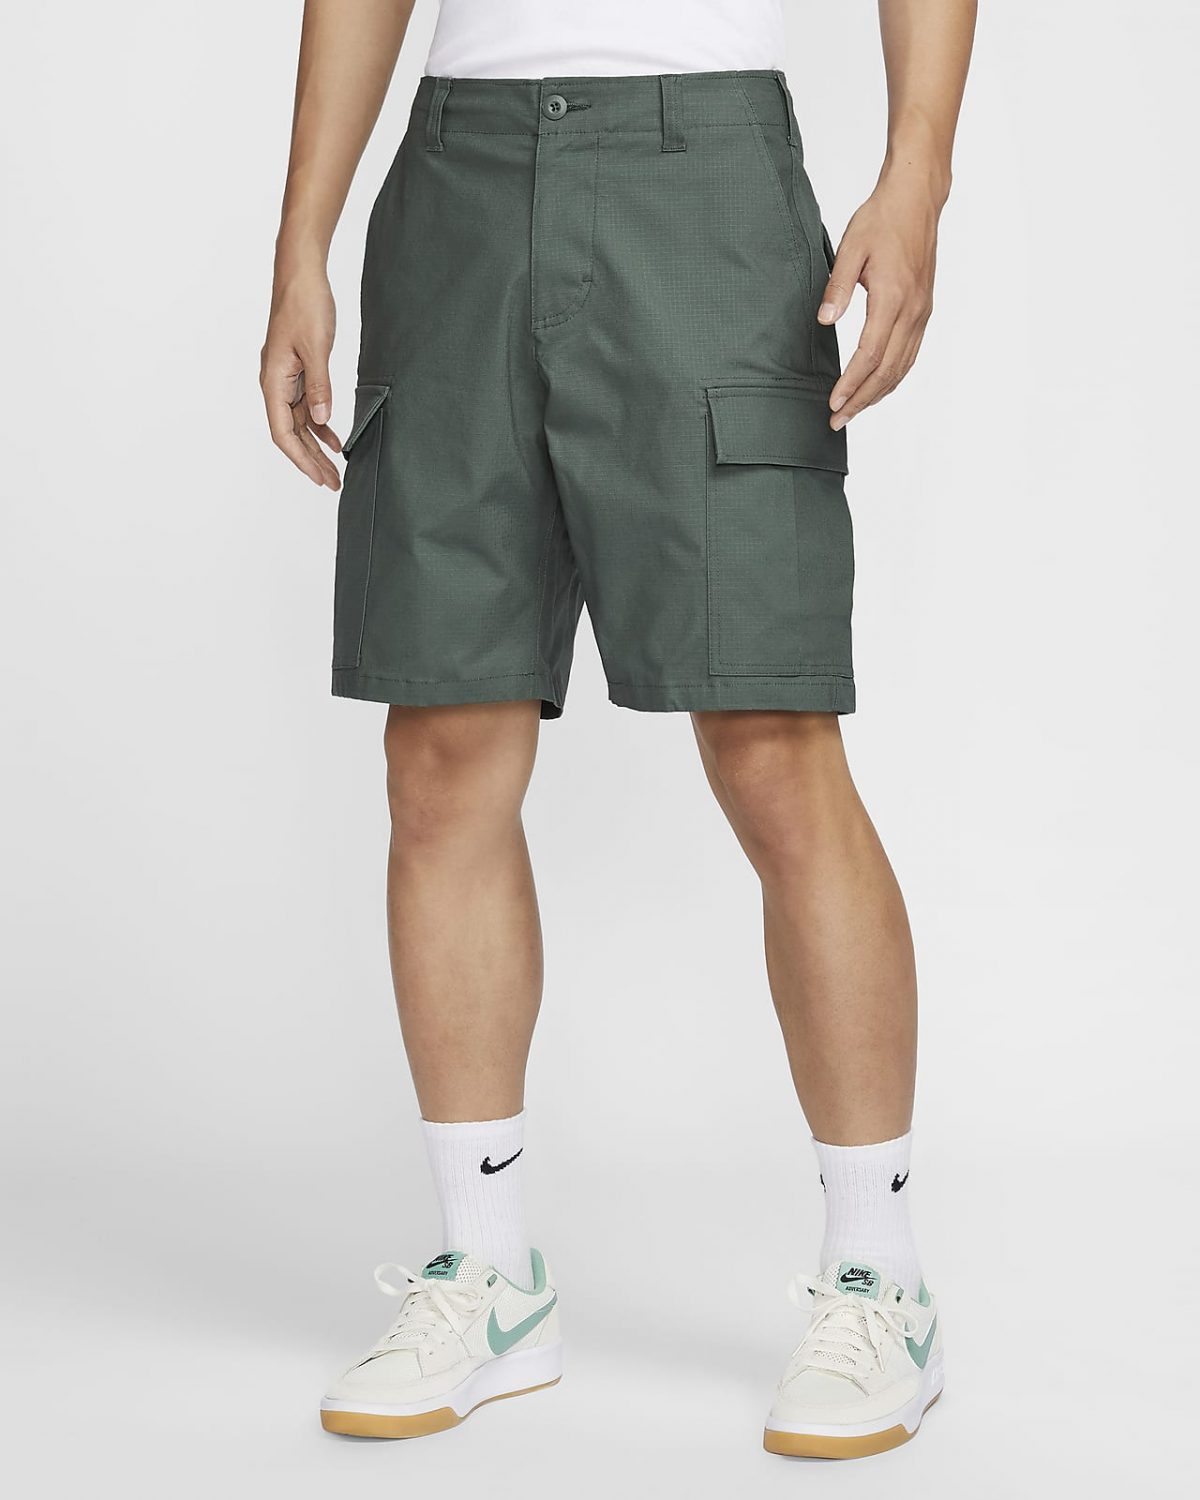 Мужские шорты Nike SB Kearny фото